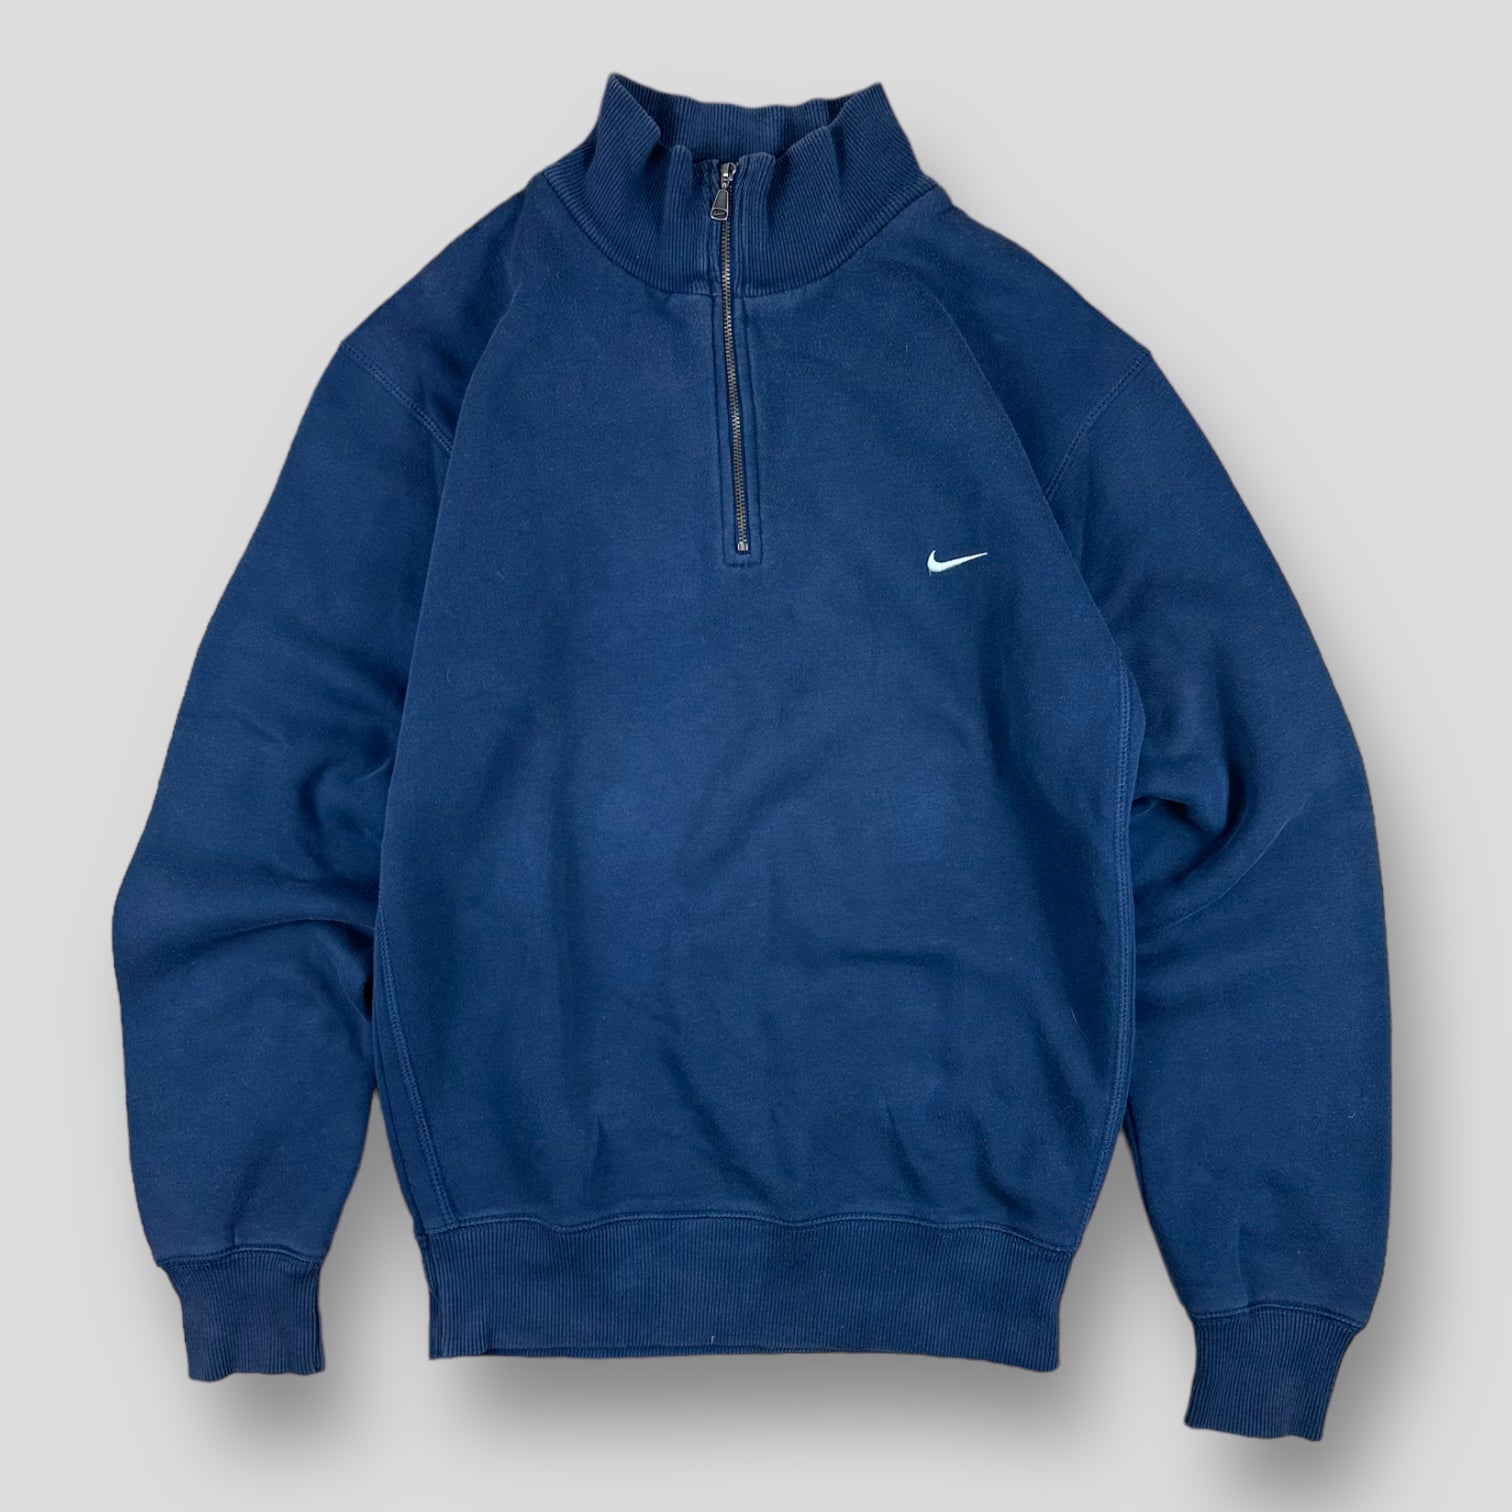 Nike quarter zip sweater